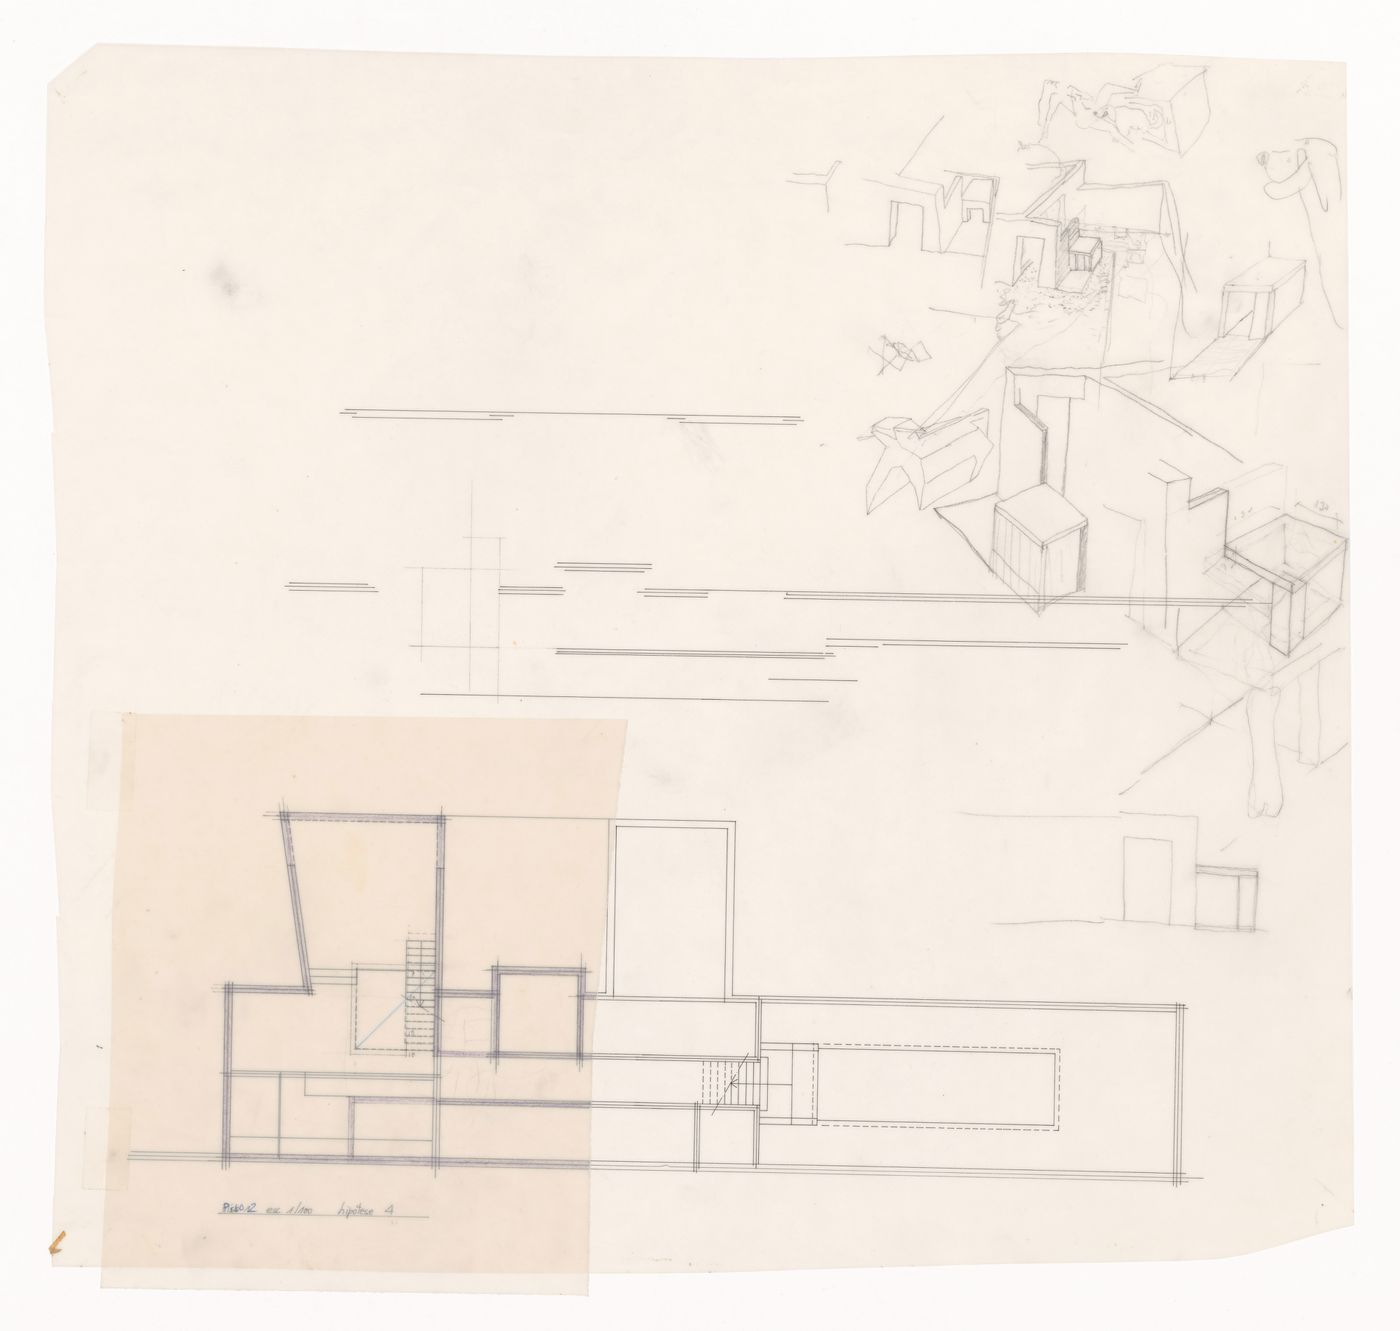 Plan and sketches for Casa Erhard Josef Pascher, Sintra